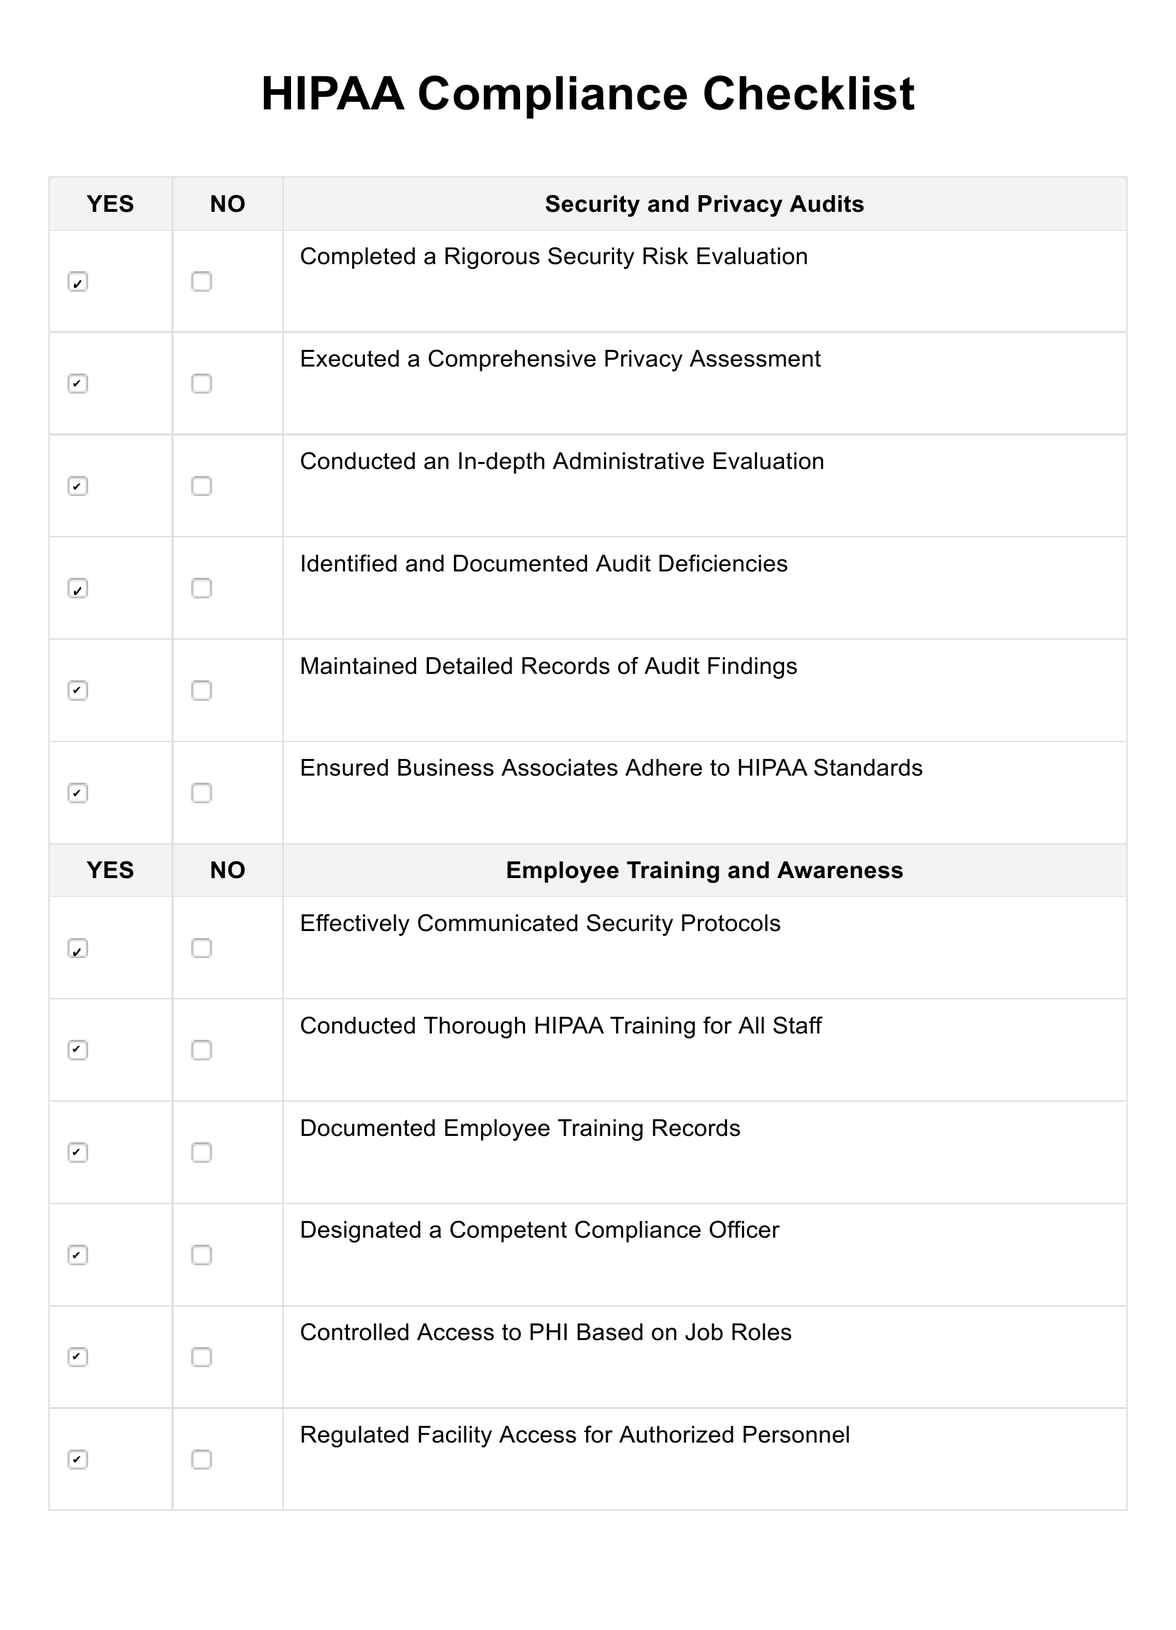 HIPAA Compliance Checklist PDF Example